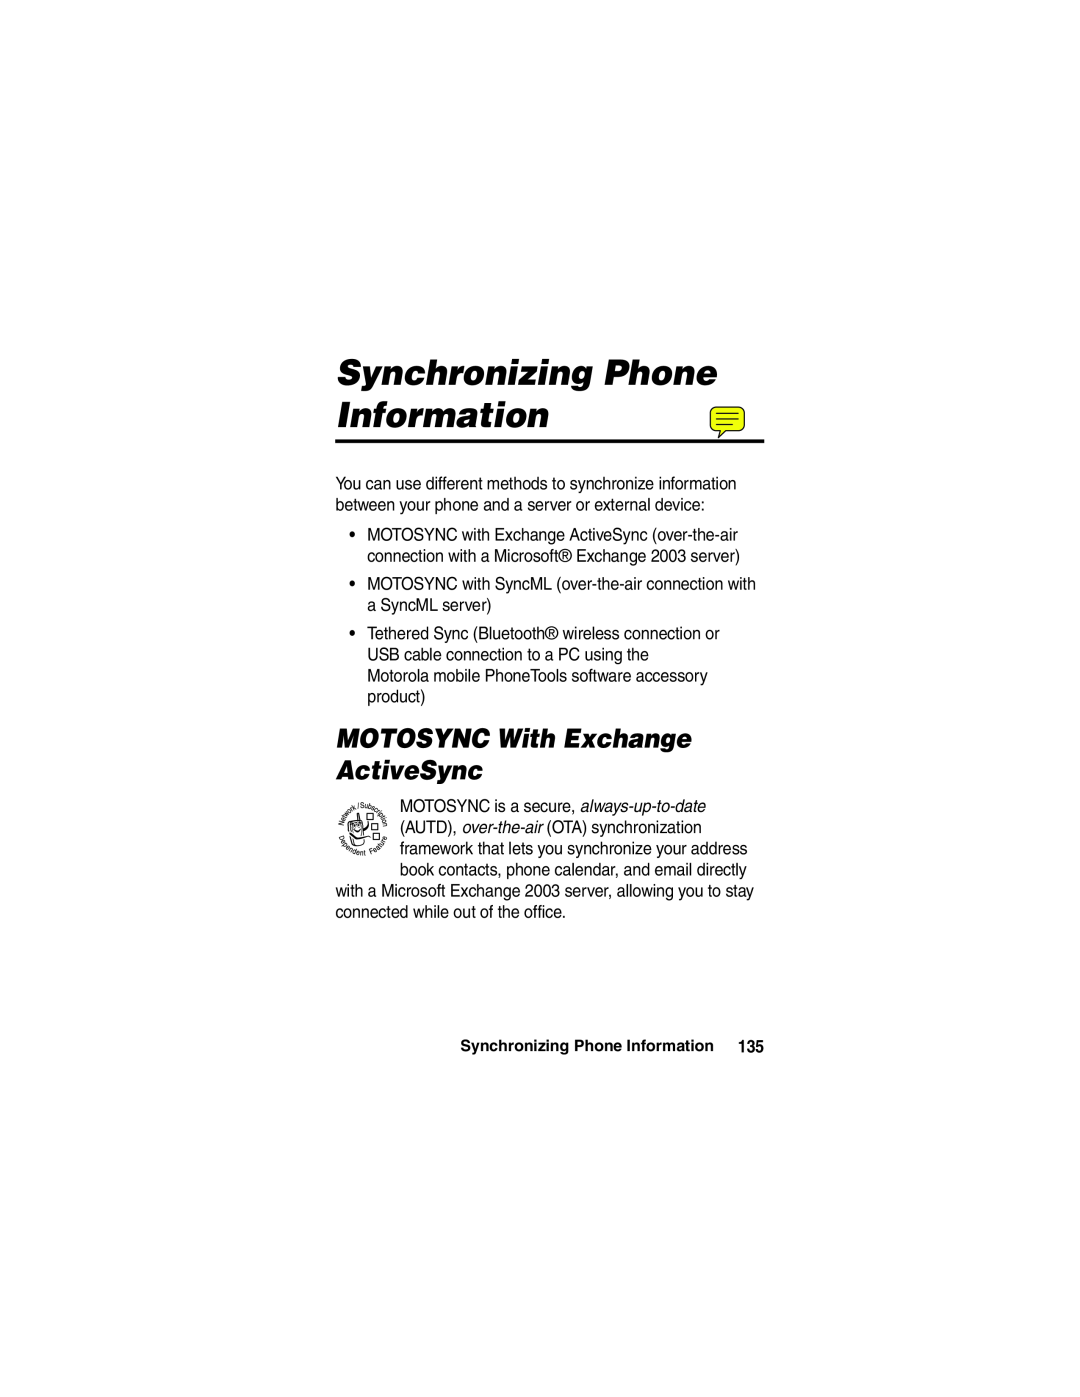 Motorola A780 manual Synchronizing Phone Information, MOTOSYNC With Exchange ActiveSync 